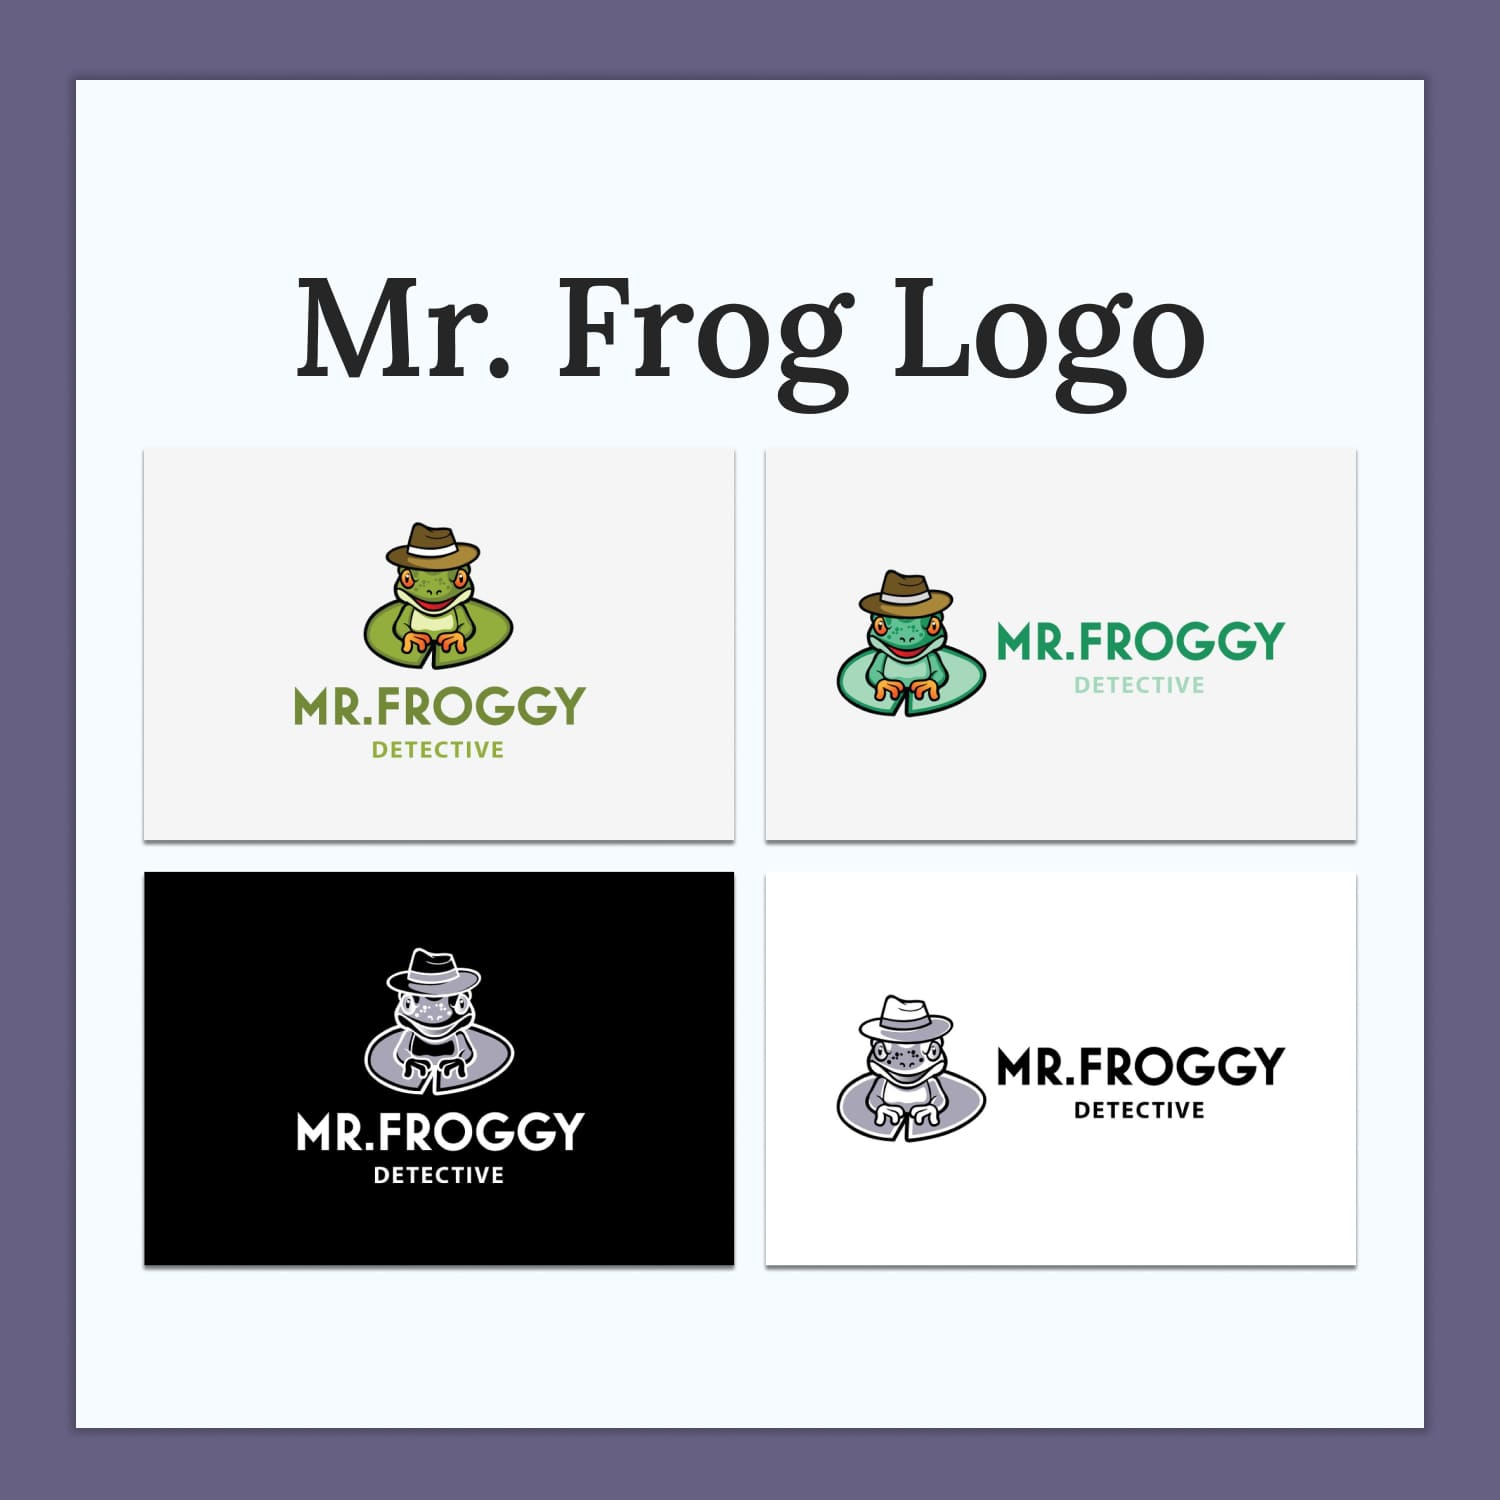 Mr. frog logo - main image preview.